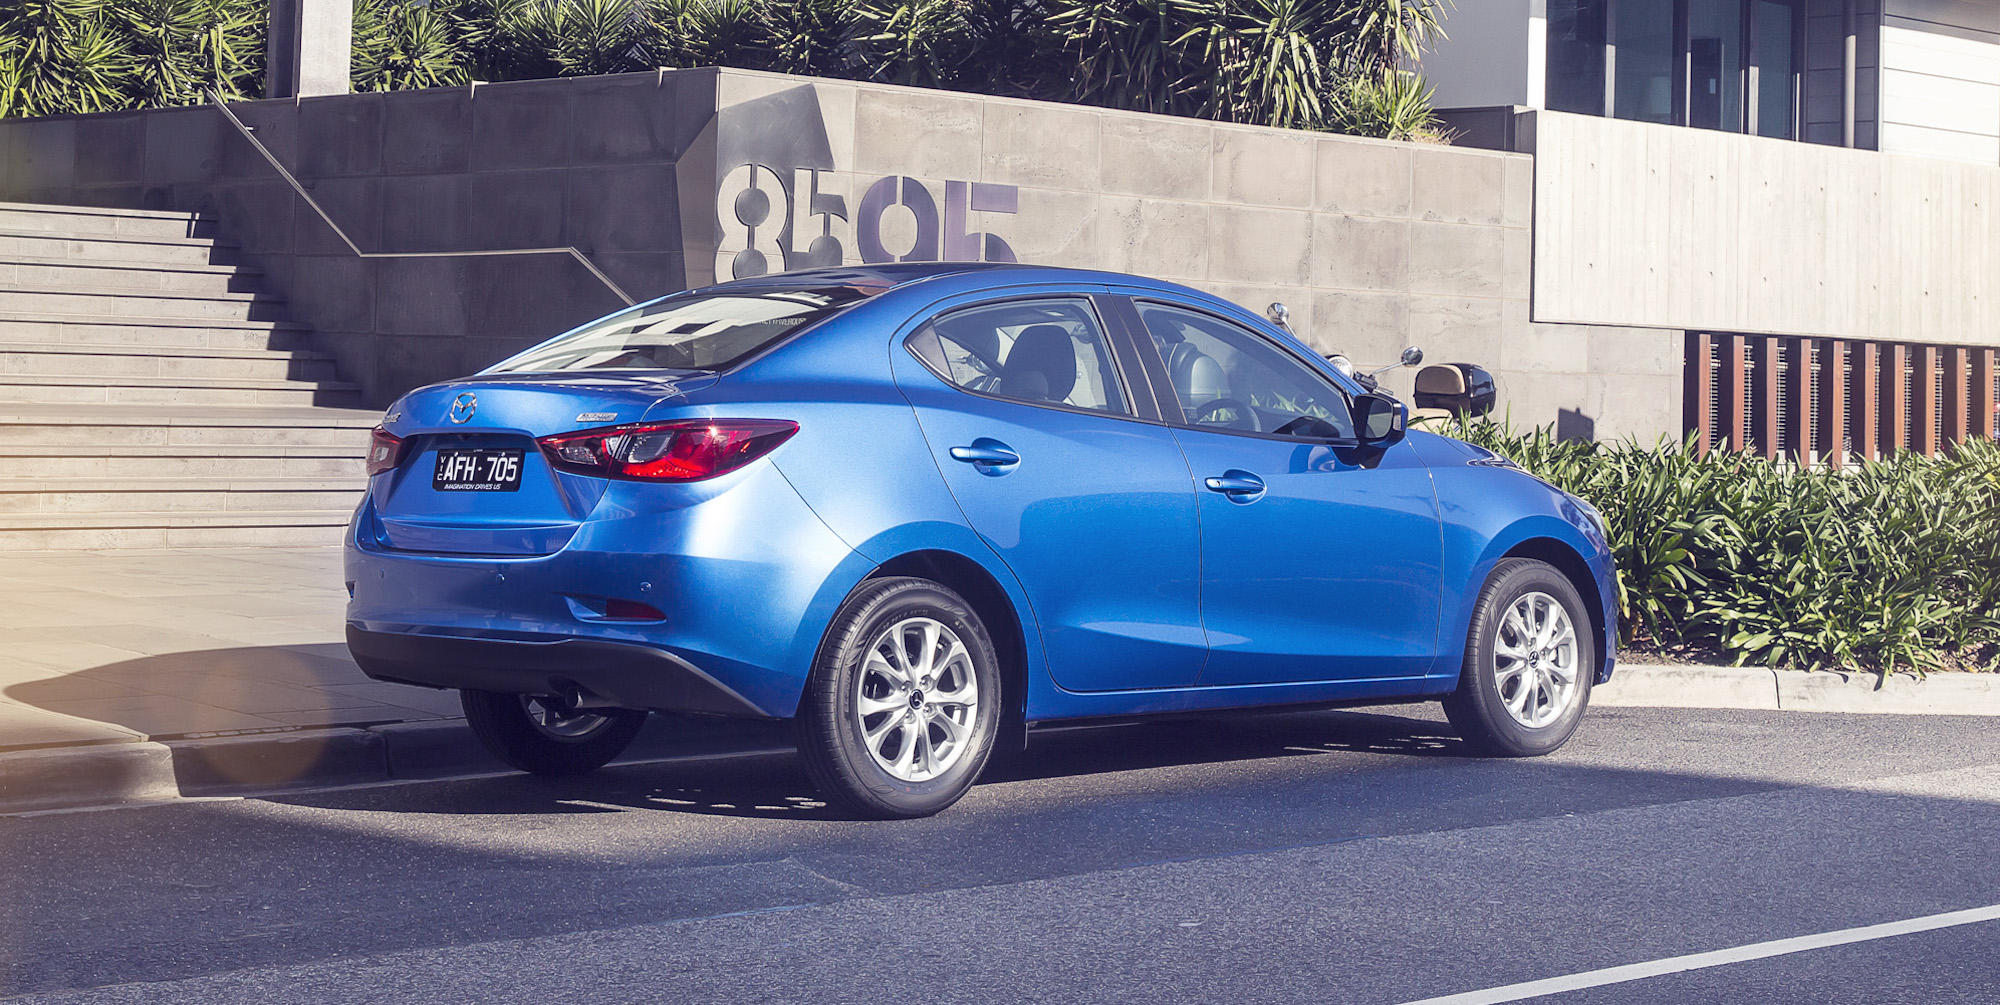 2016 Mazda 2 Sedan Review - Photos | CarAdvice